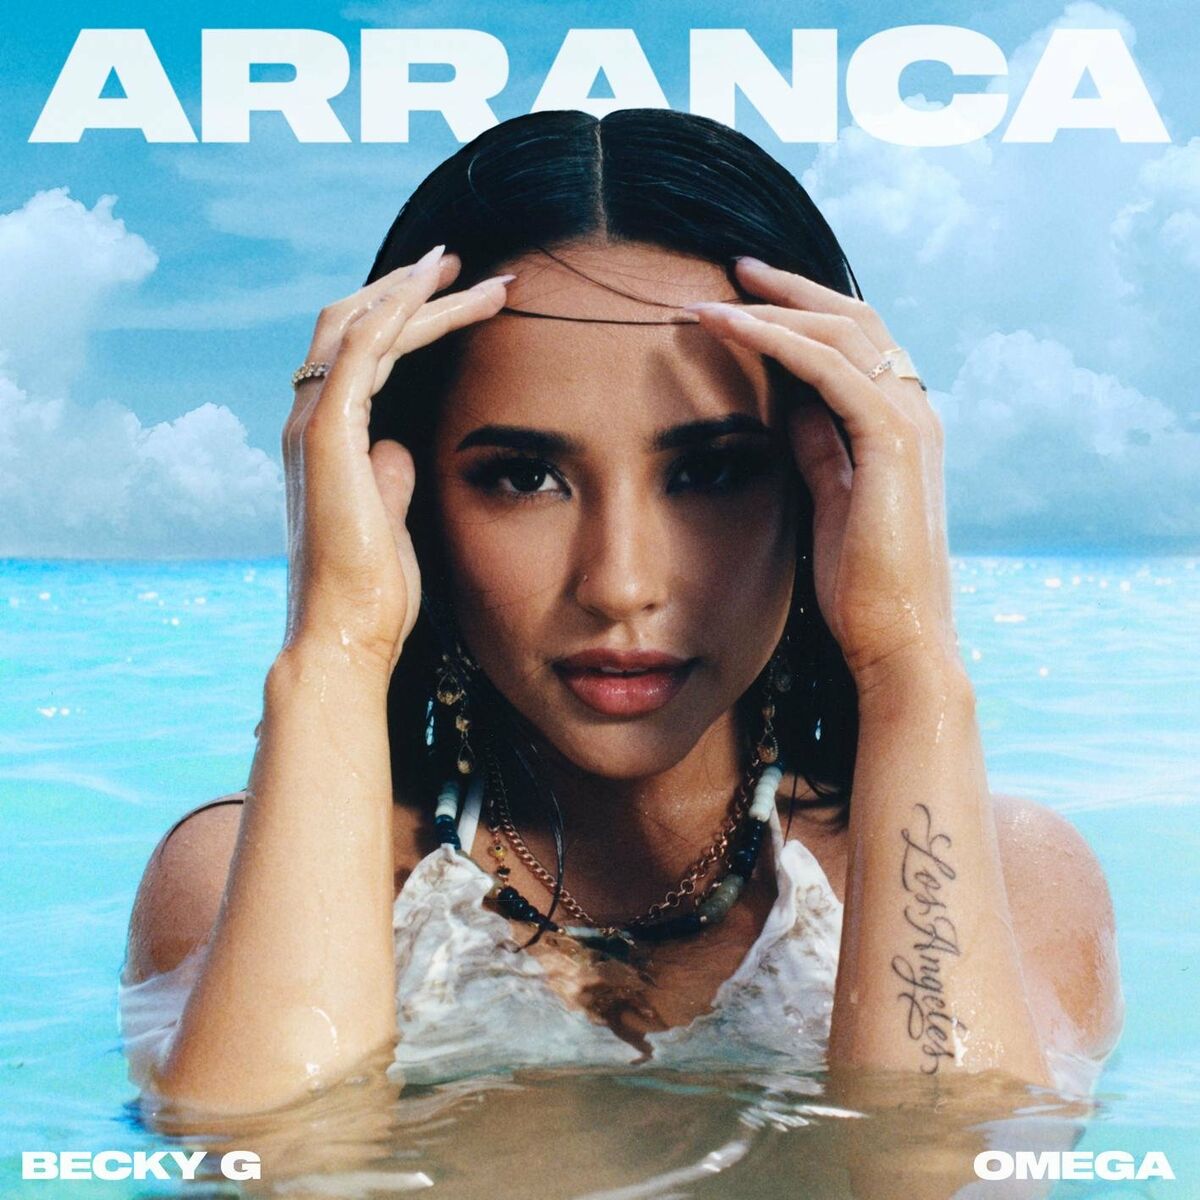 Becky G ft. featuring Omega Arranca cover artwork